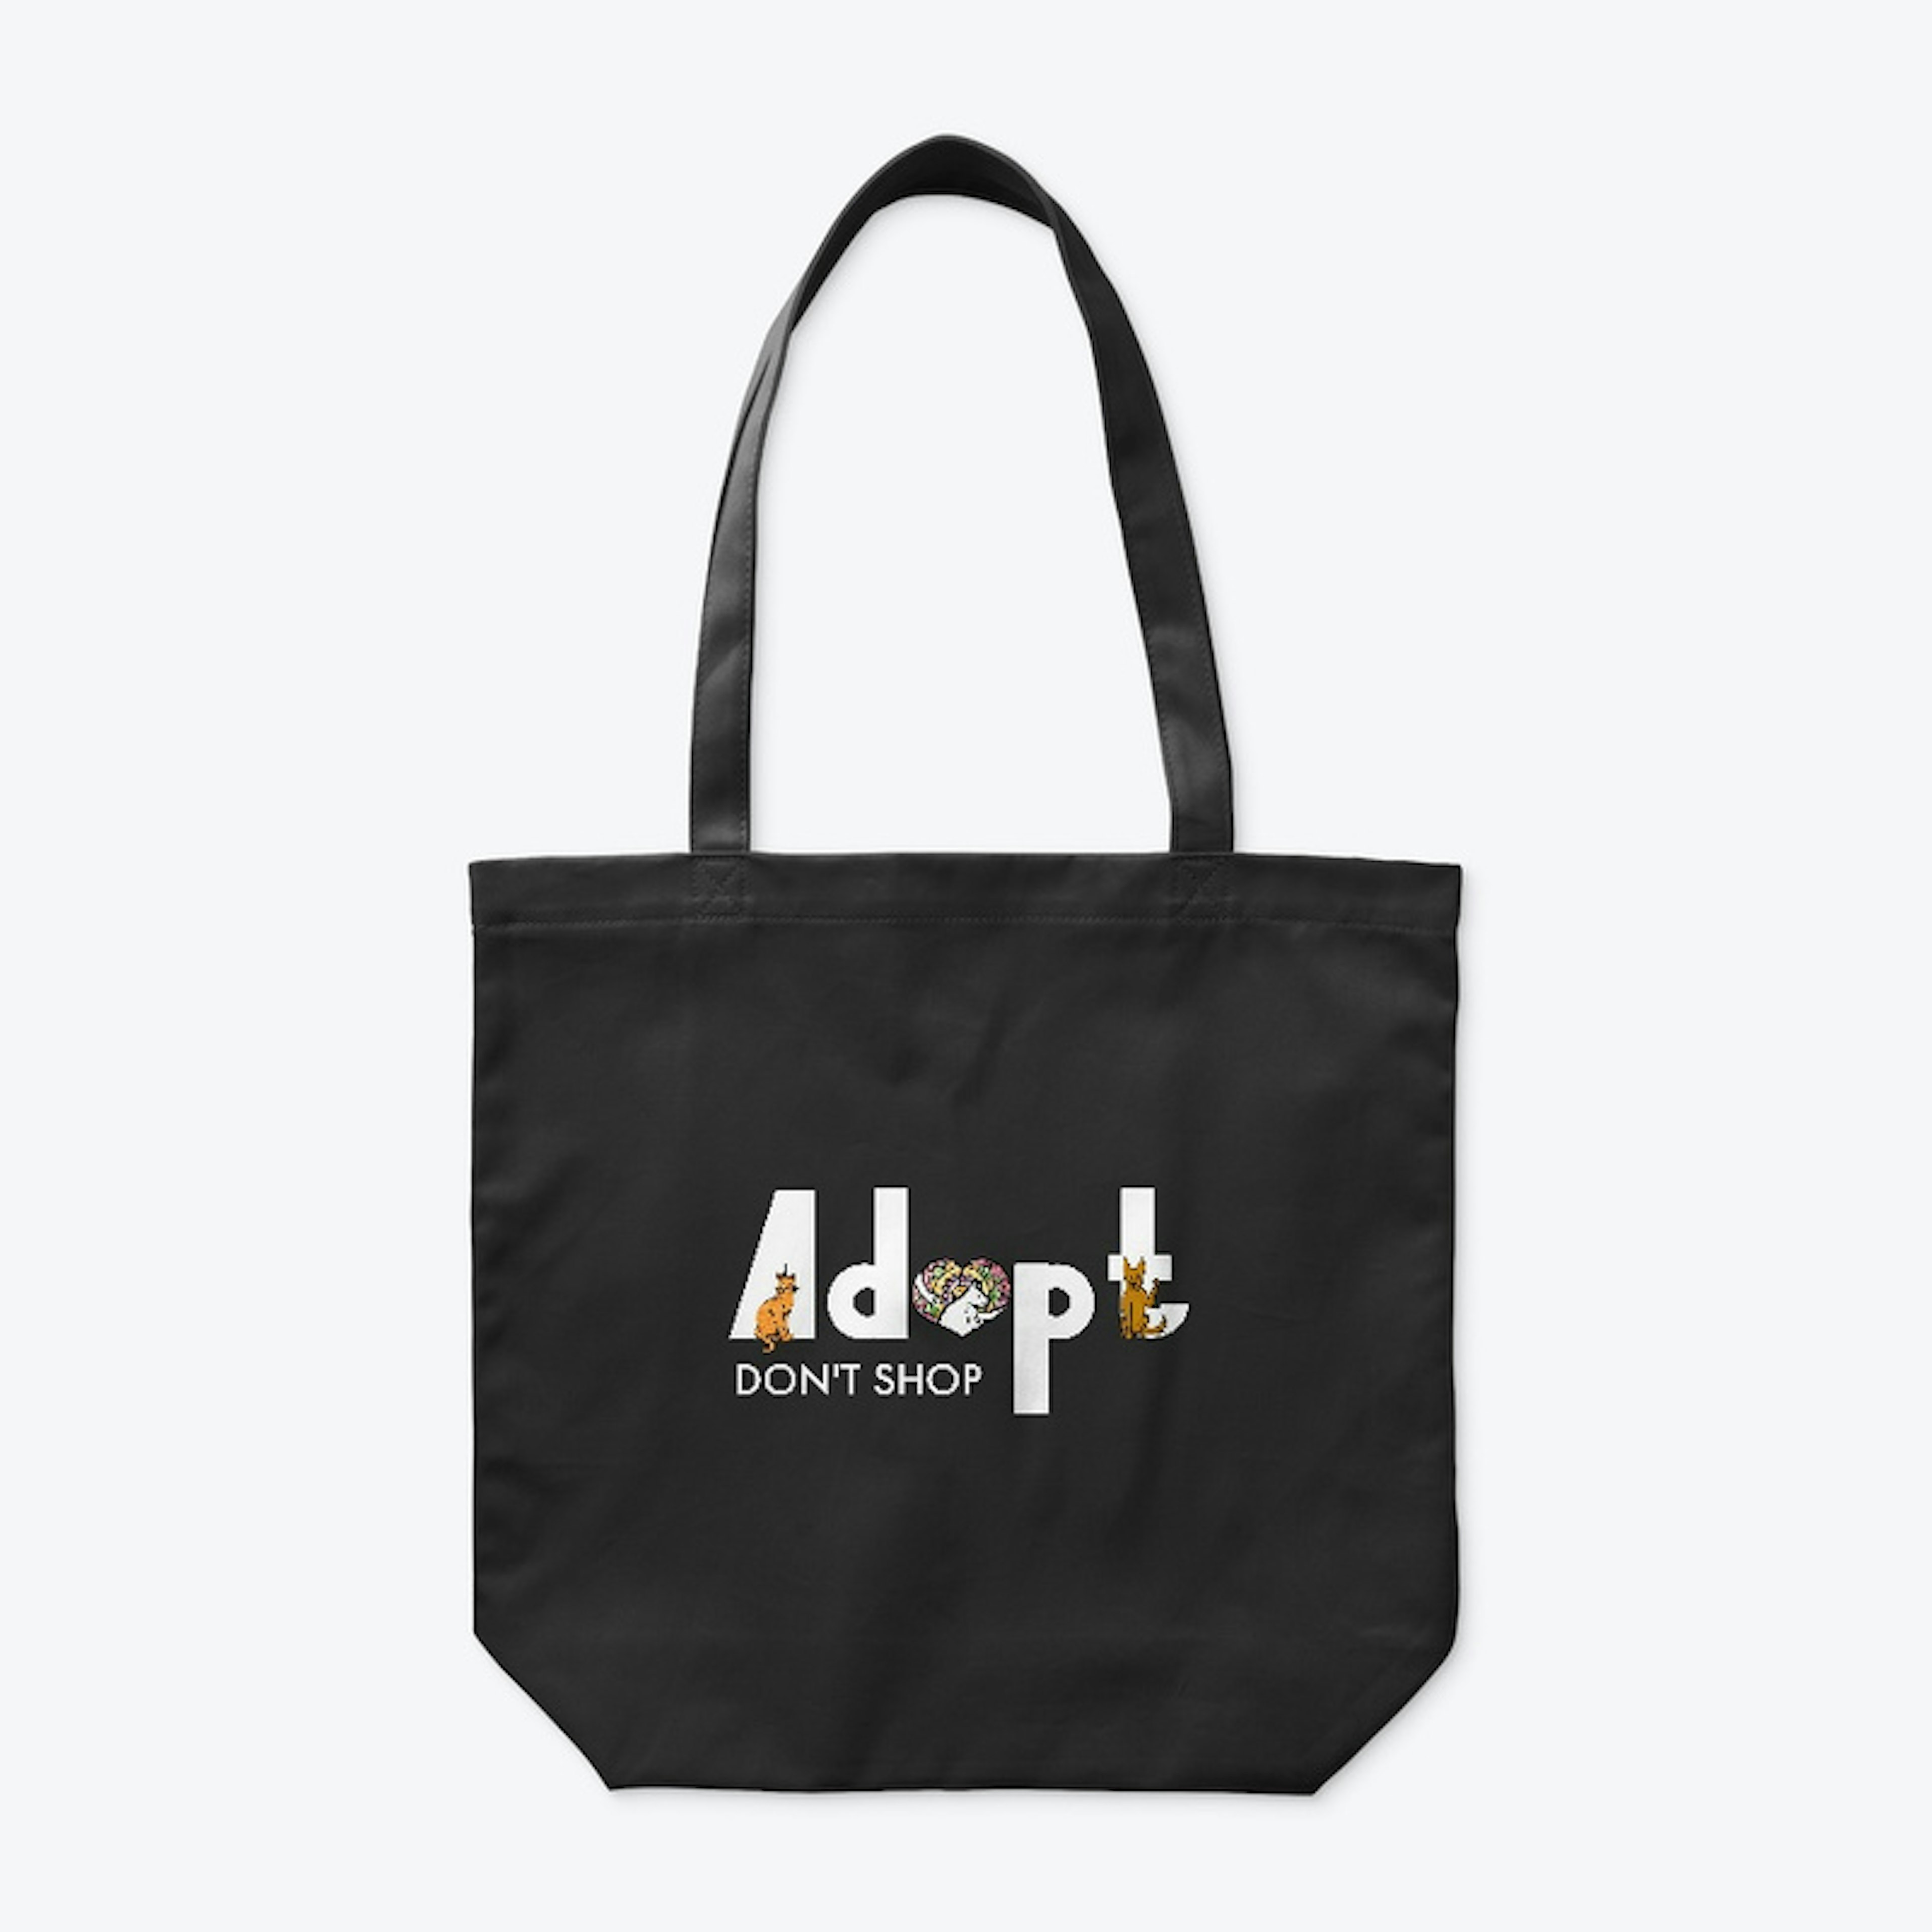 Adopt, Don't Shop.